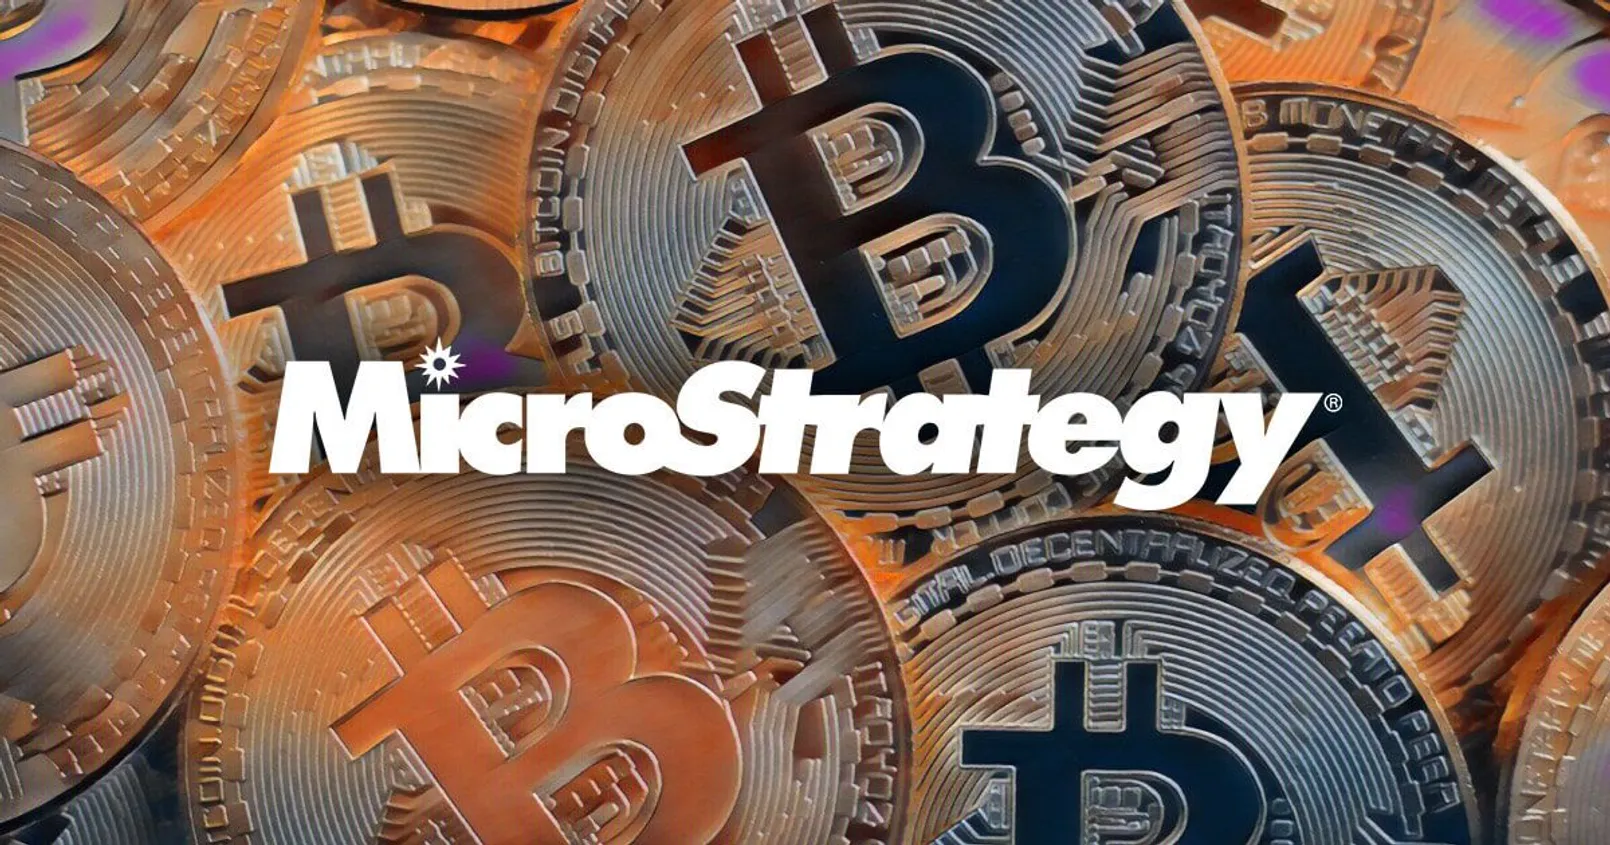 Microstrategy Bitcoin.jpg